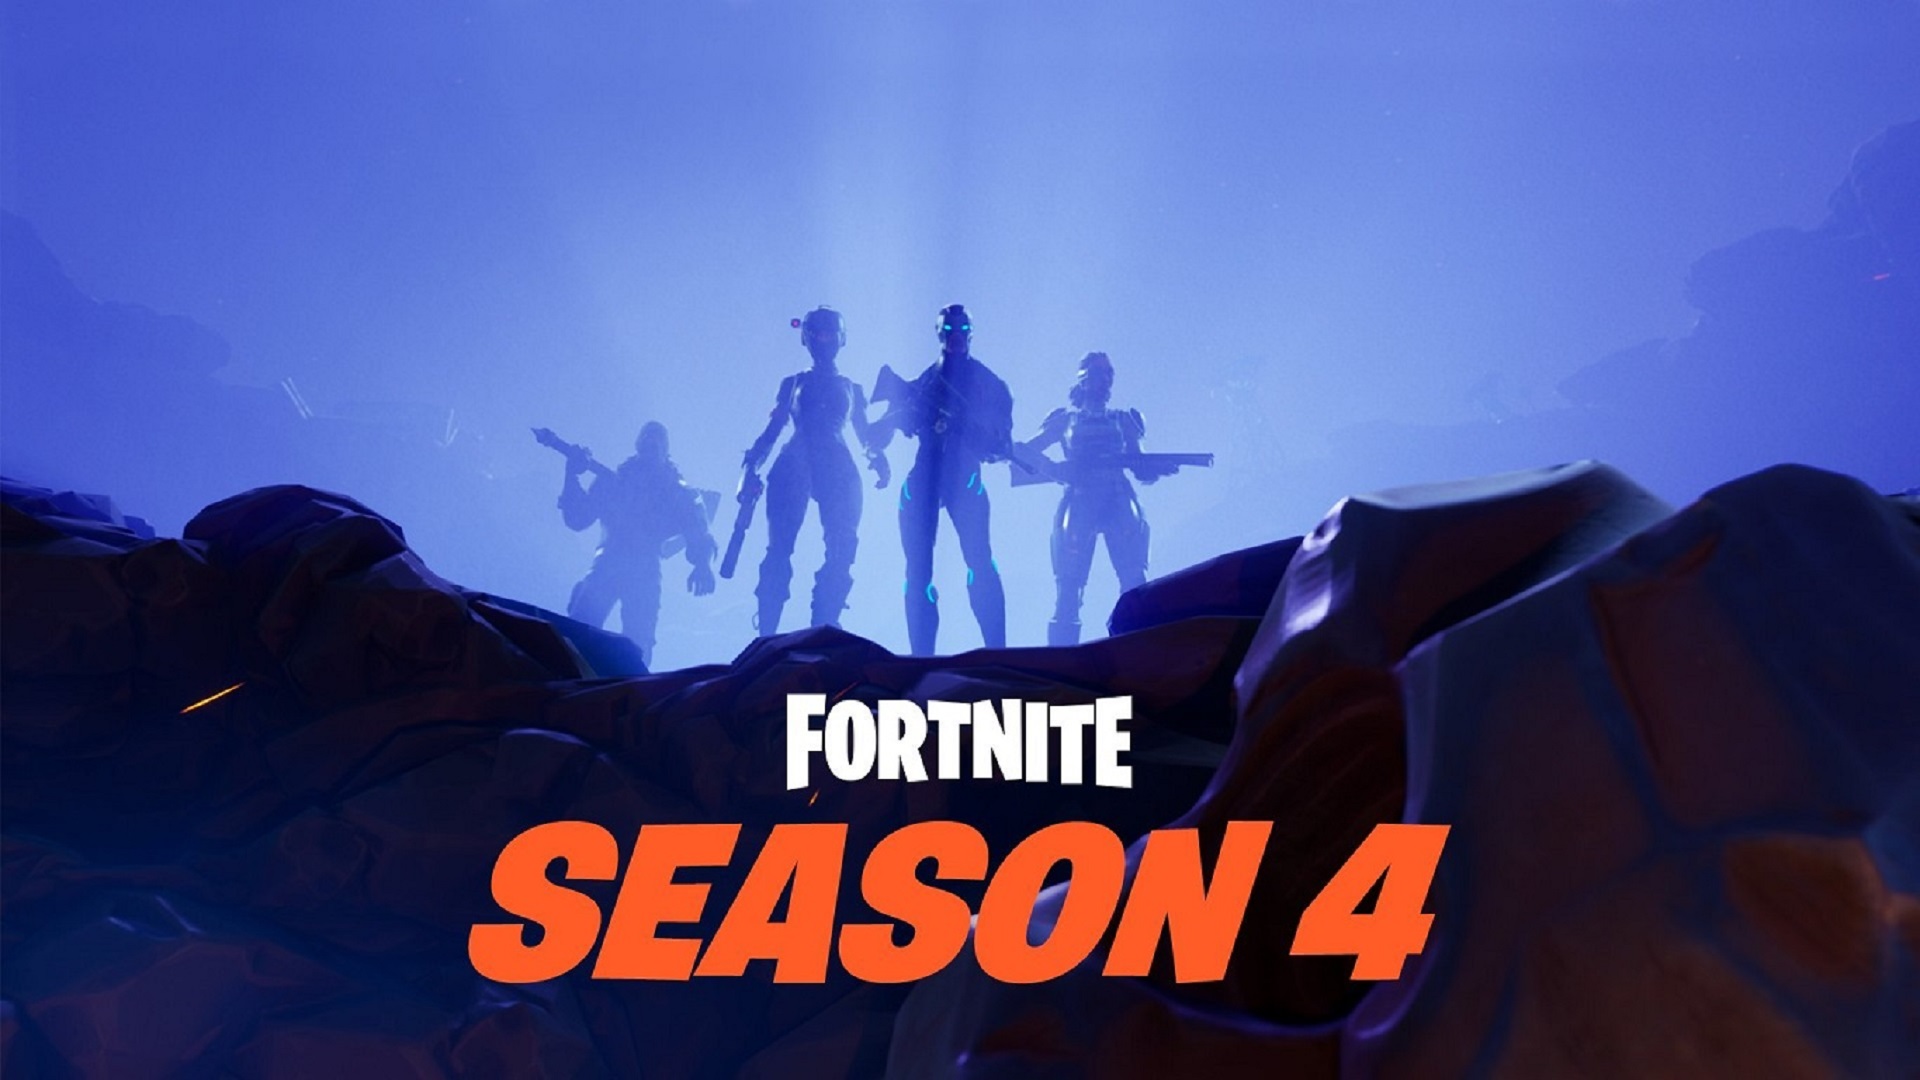 Fortnite season 4 announcement